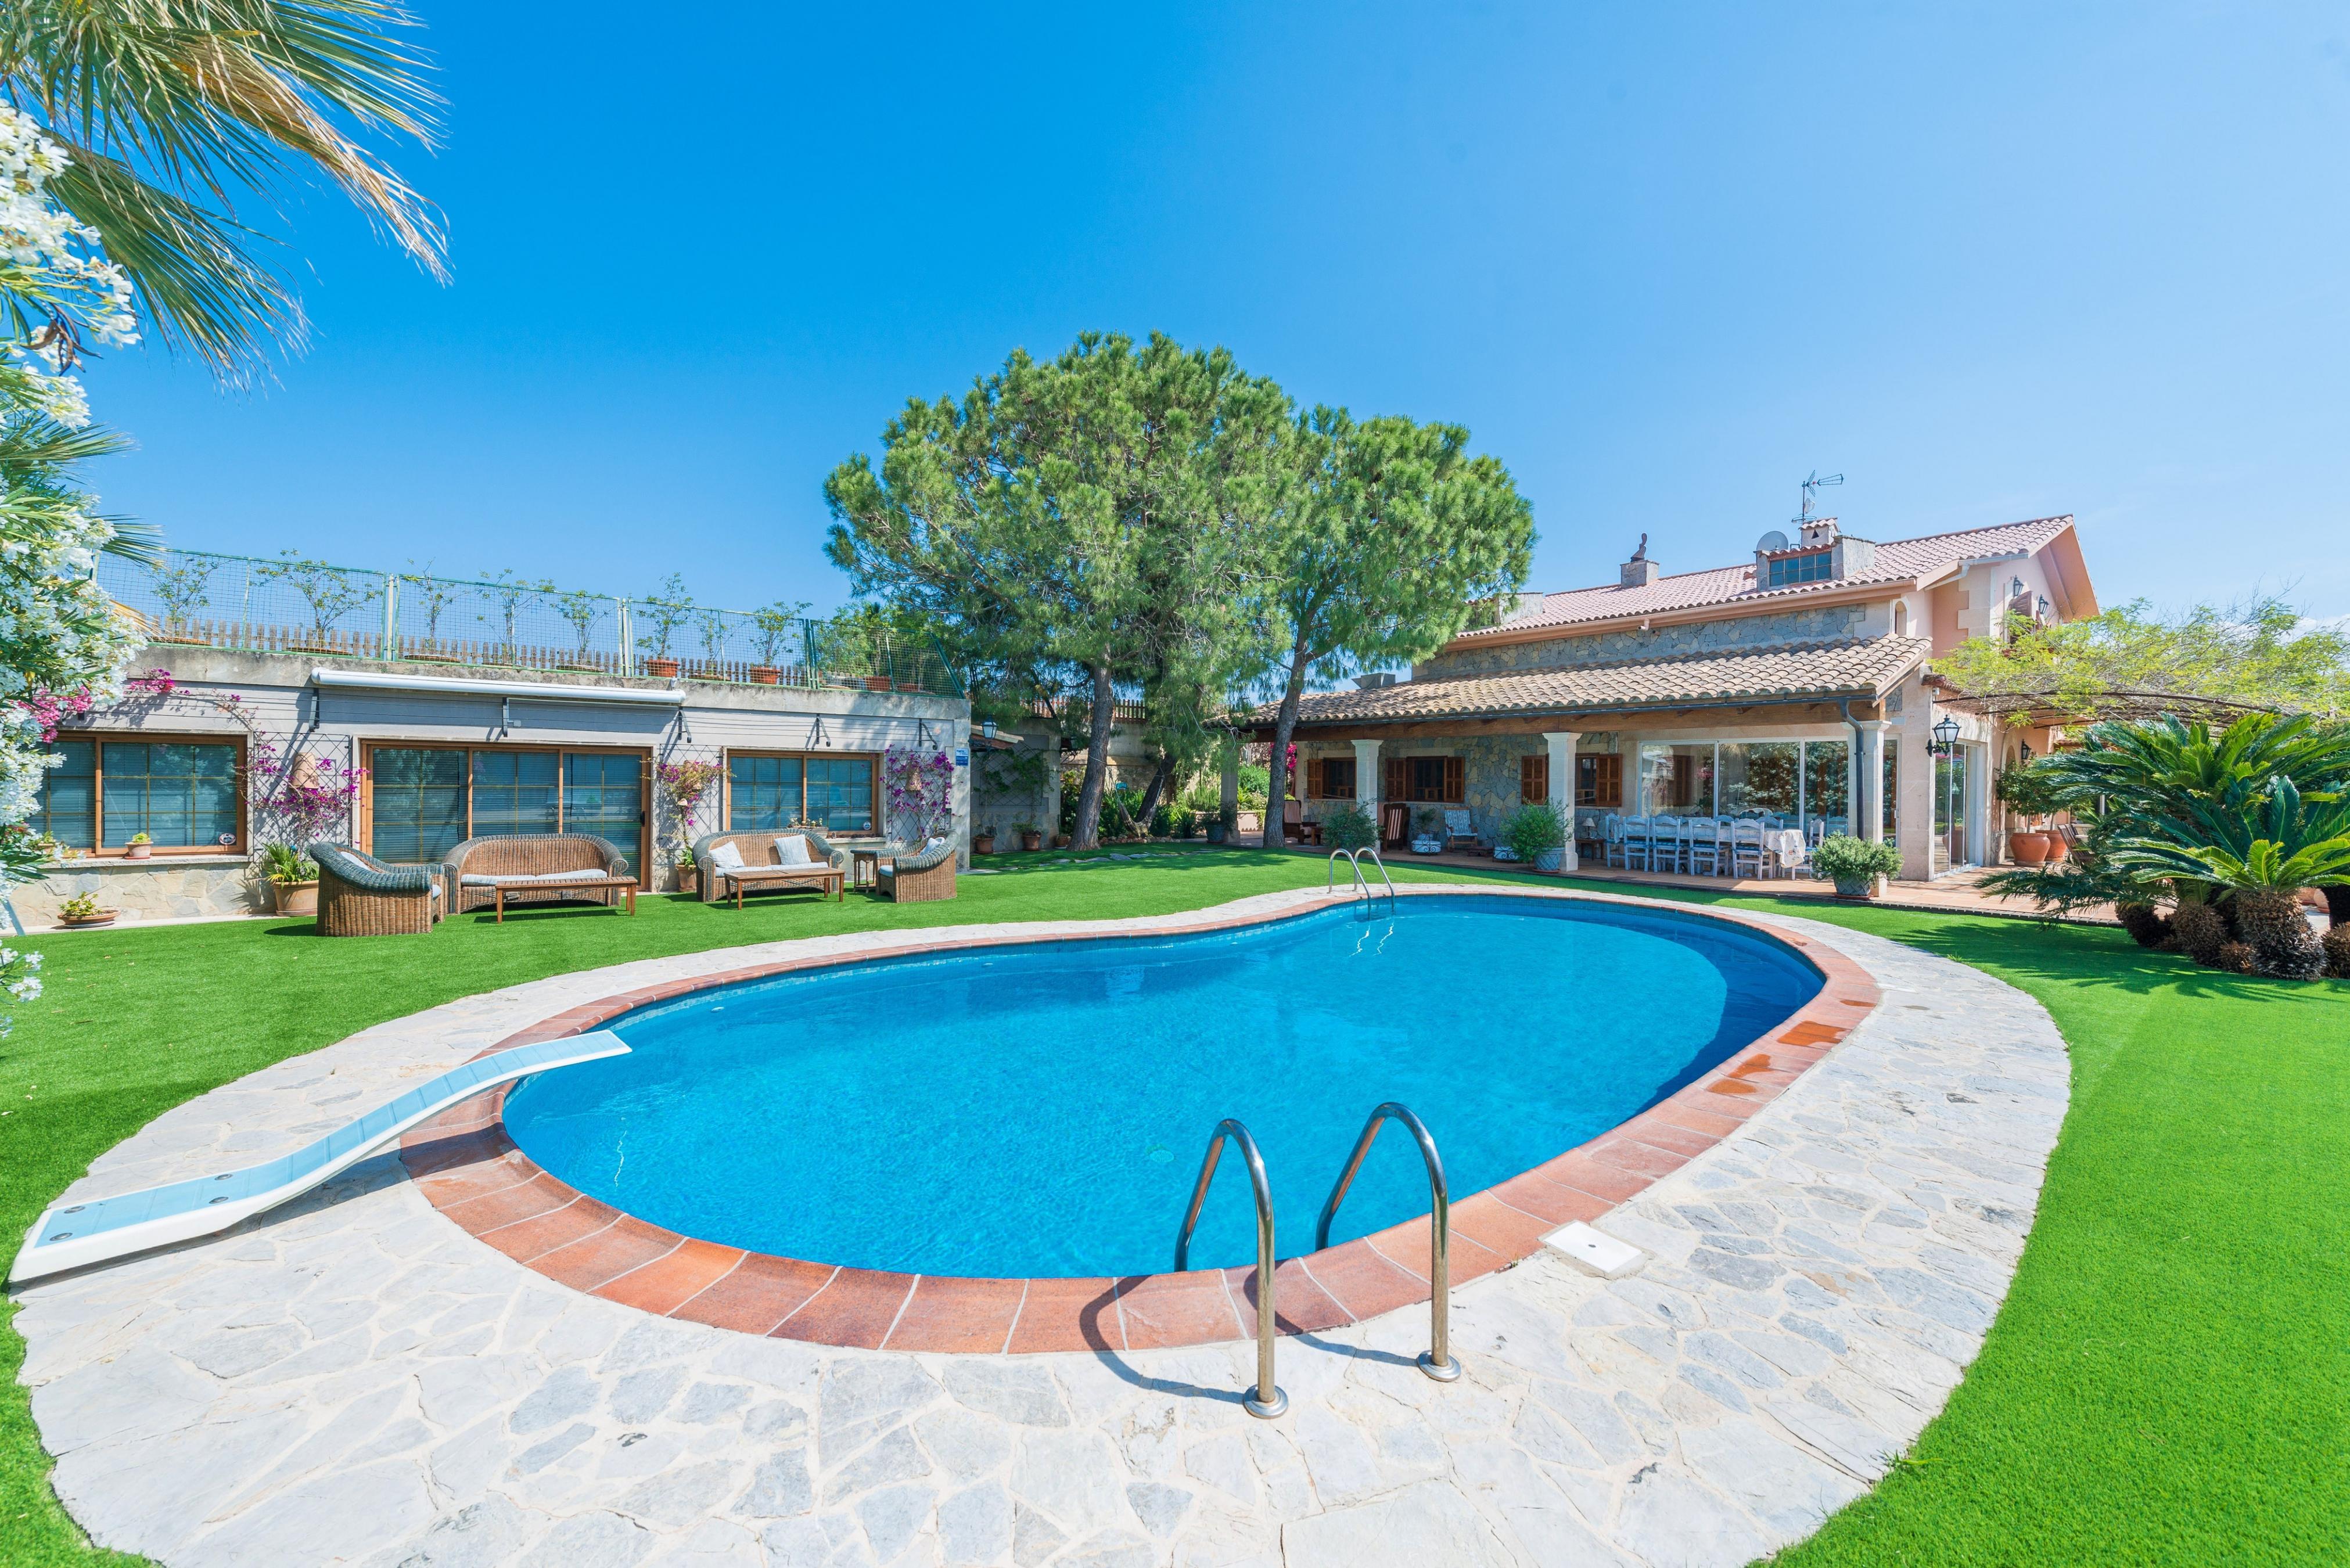 Property Image 1 - VILLA MARJALS 16 - Villa with private pool in Muro. Free WiFi